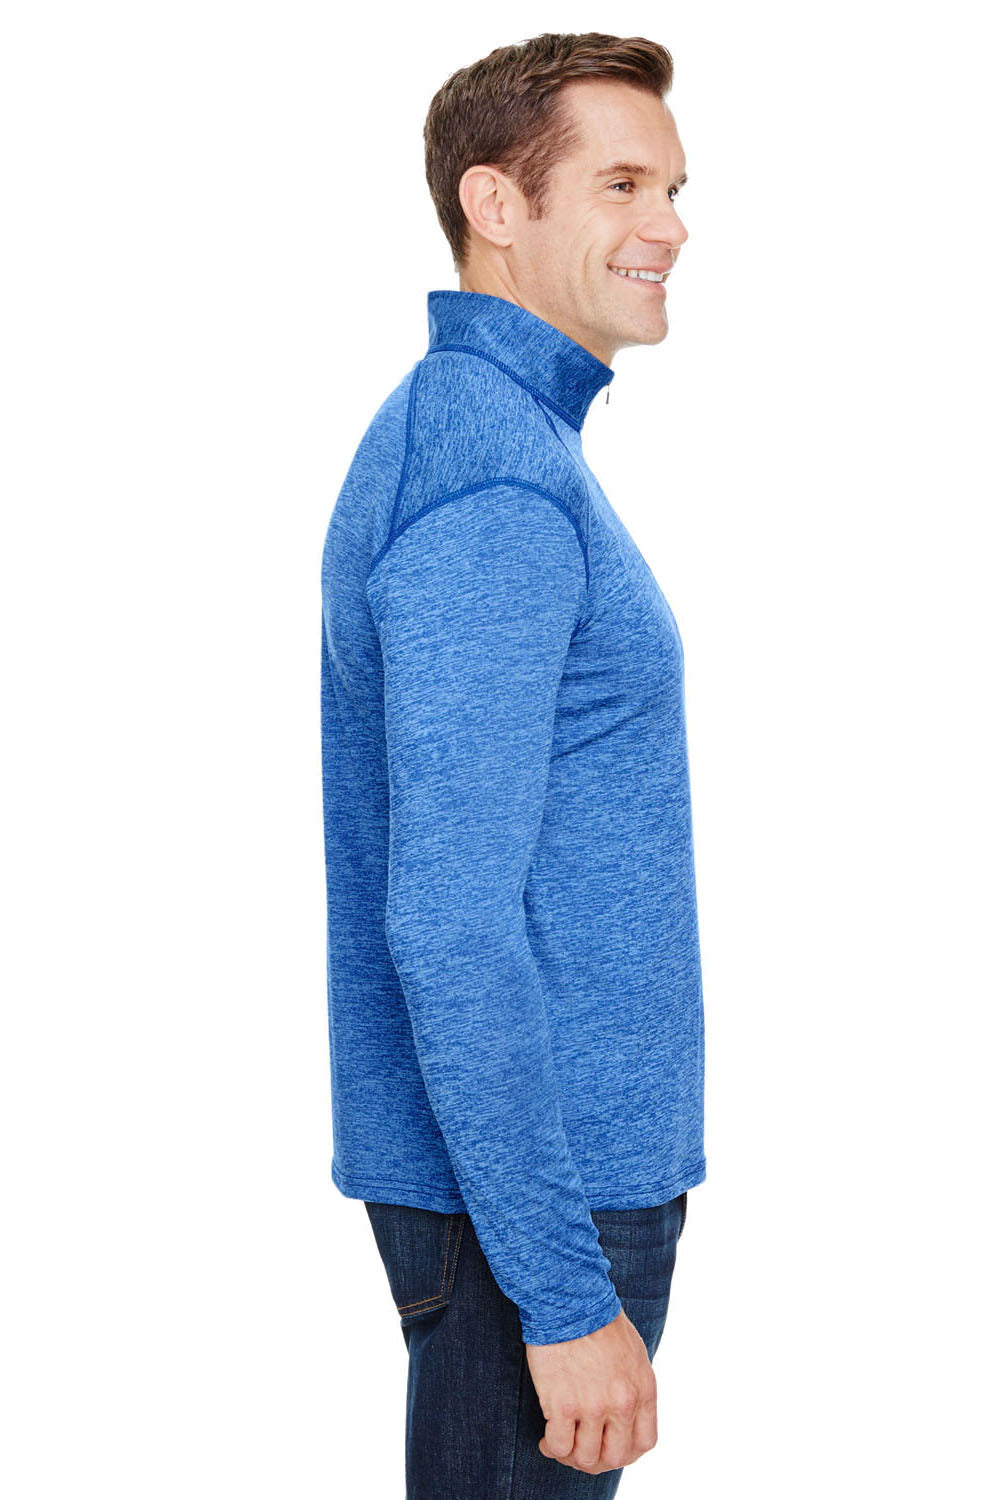 A4 N4010 Mens Tonal Space Dye Performance Moisture Wicking 1/4 Zip Sweatshirt Light Blue Side